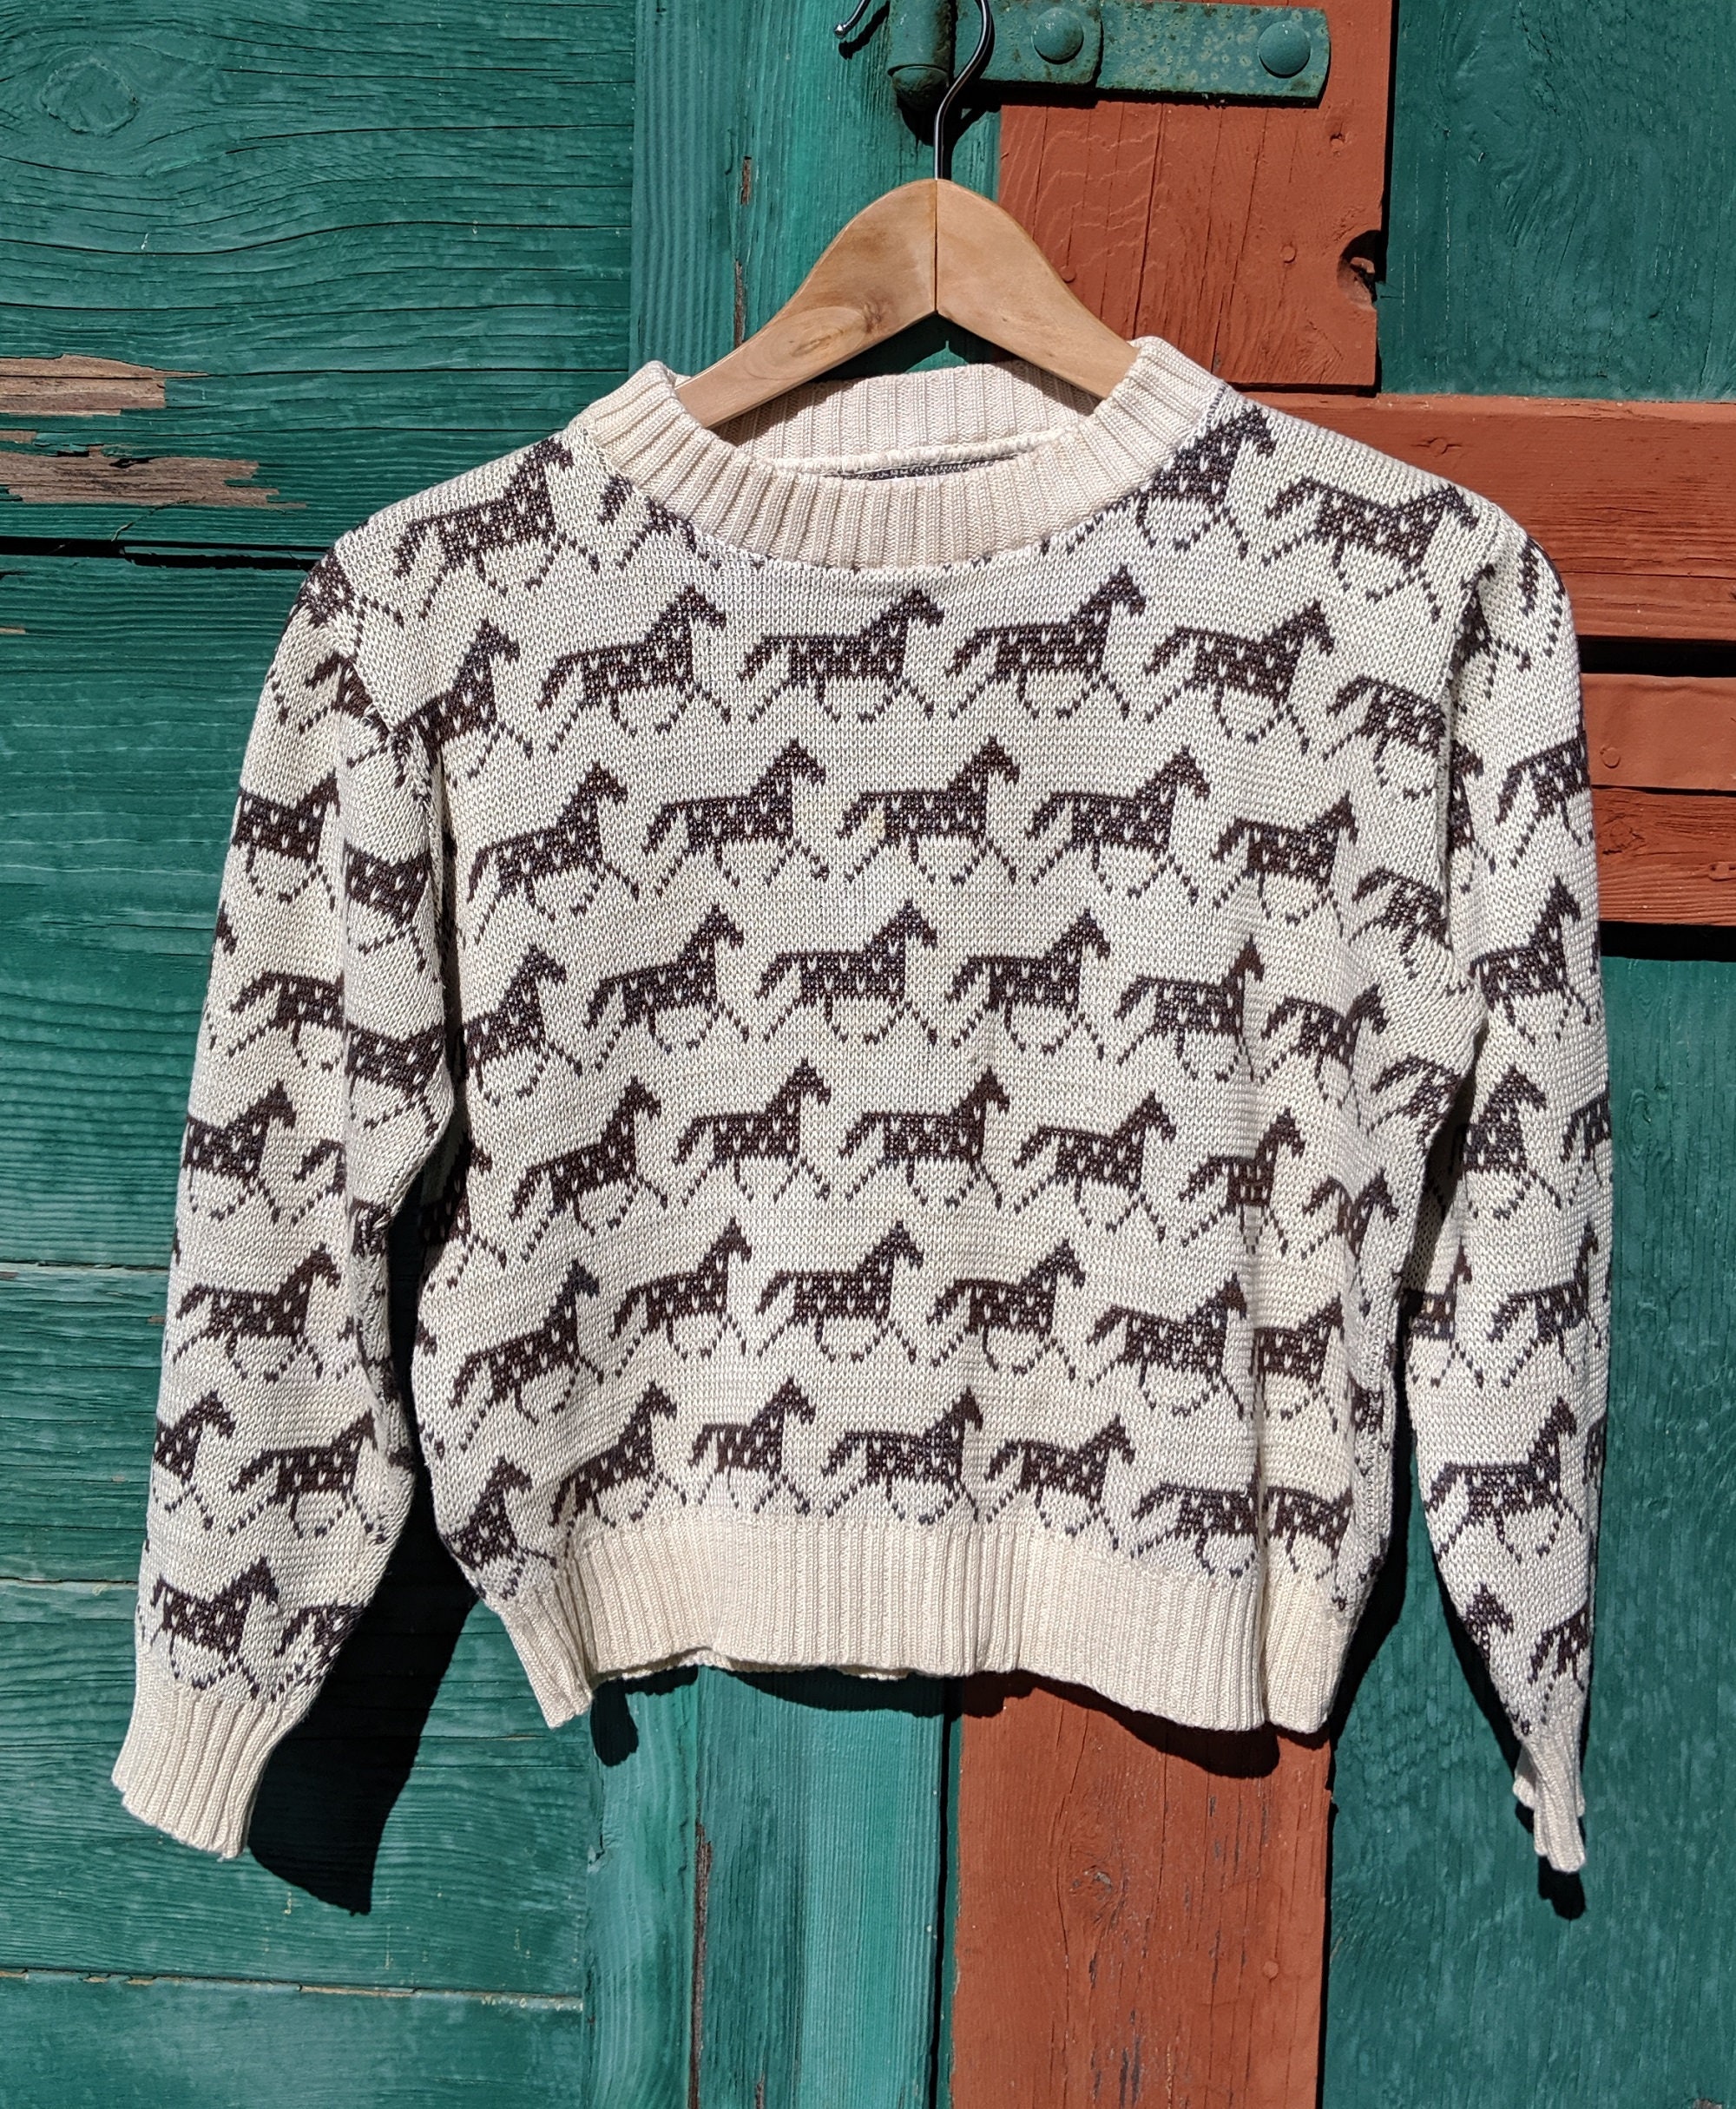 Vintage Sweater Cropped Trotting Horses Jacquard Knit